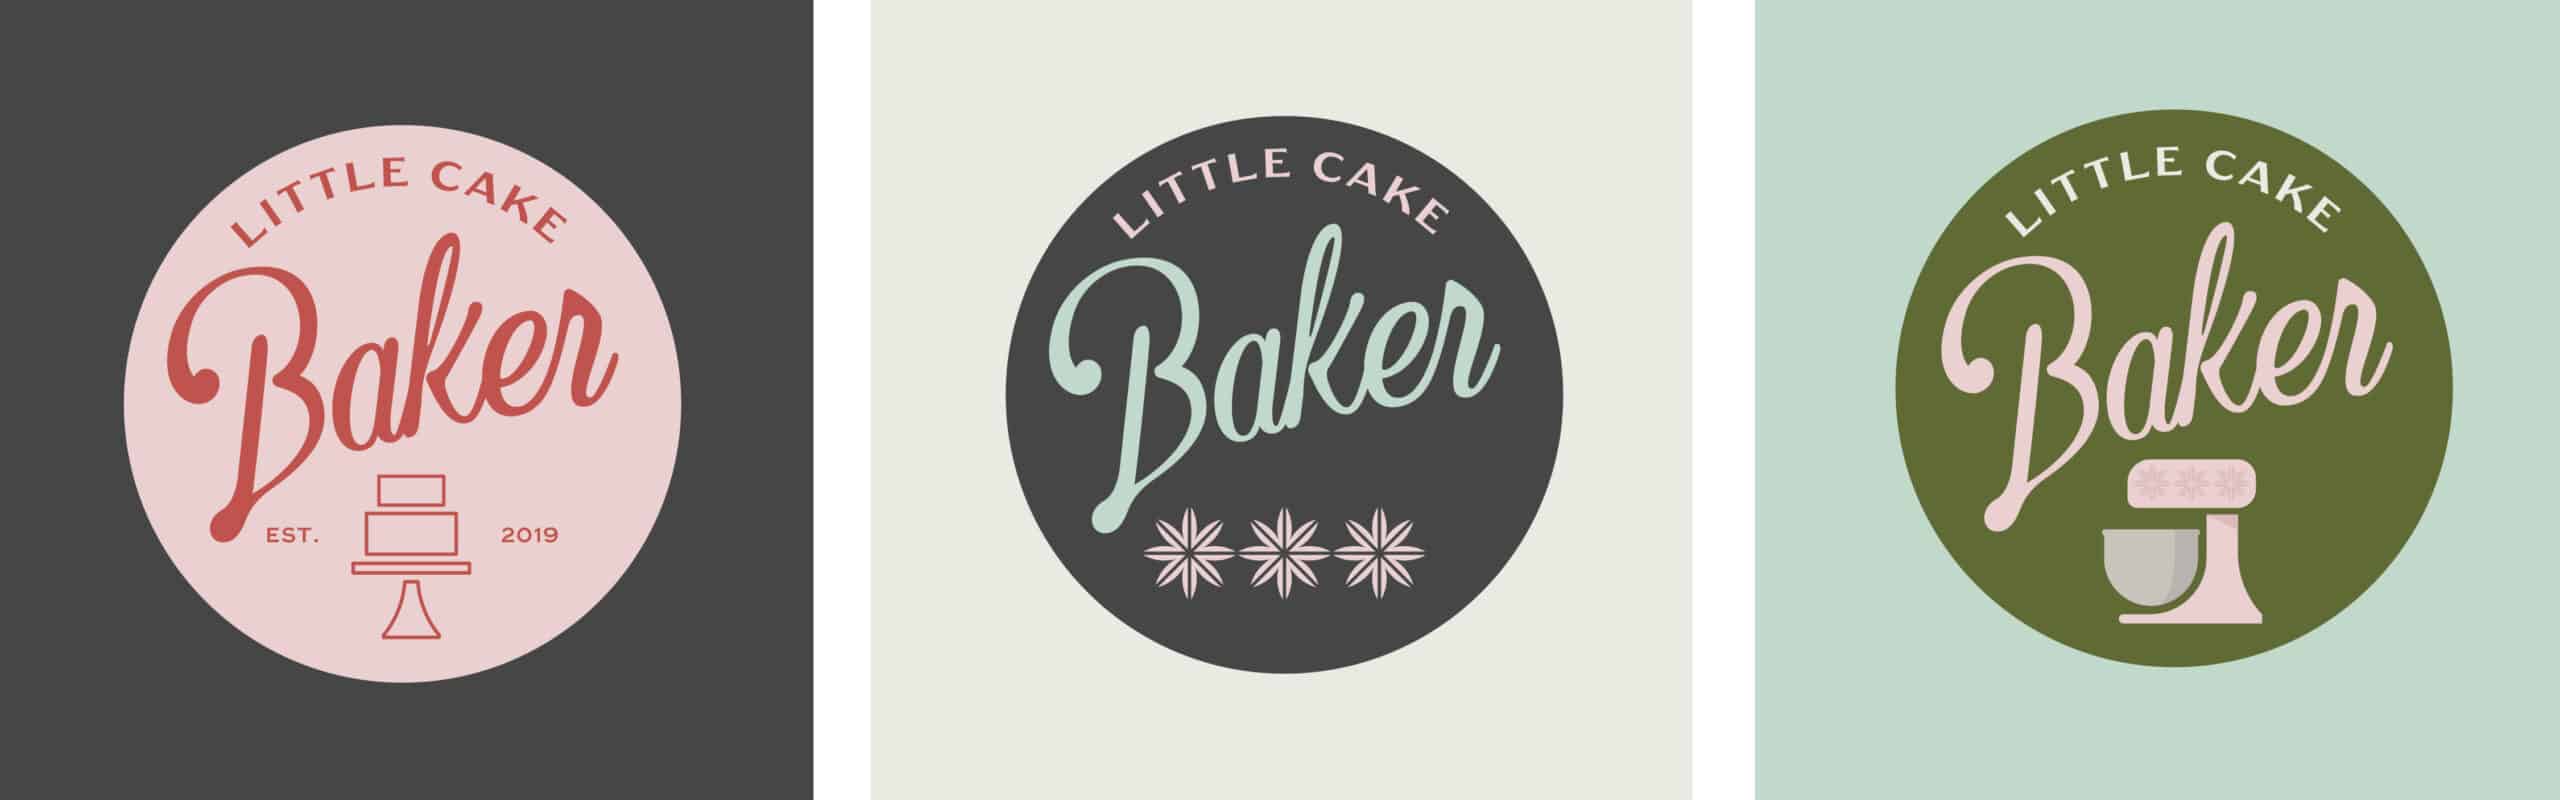 Cake Icon for Little Cake Baker by Stellen Design branding agency in Los Angles CA